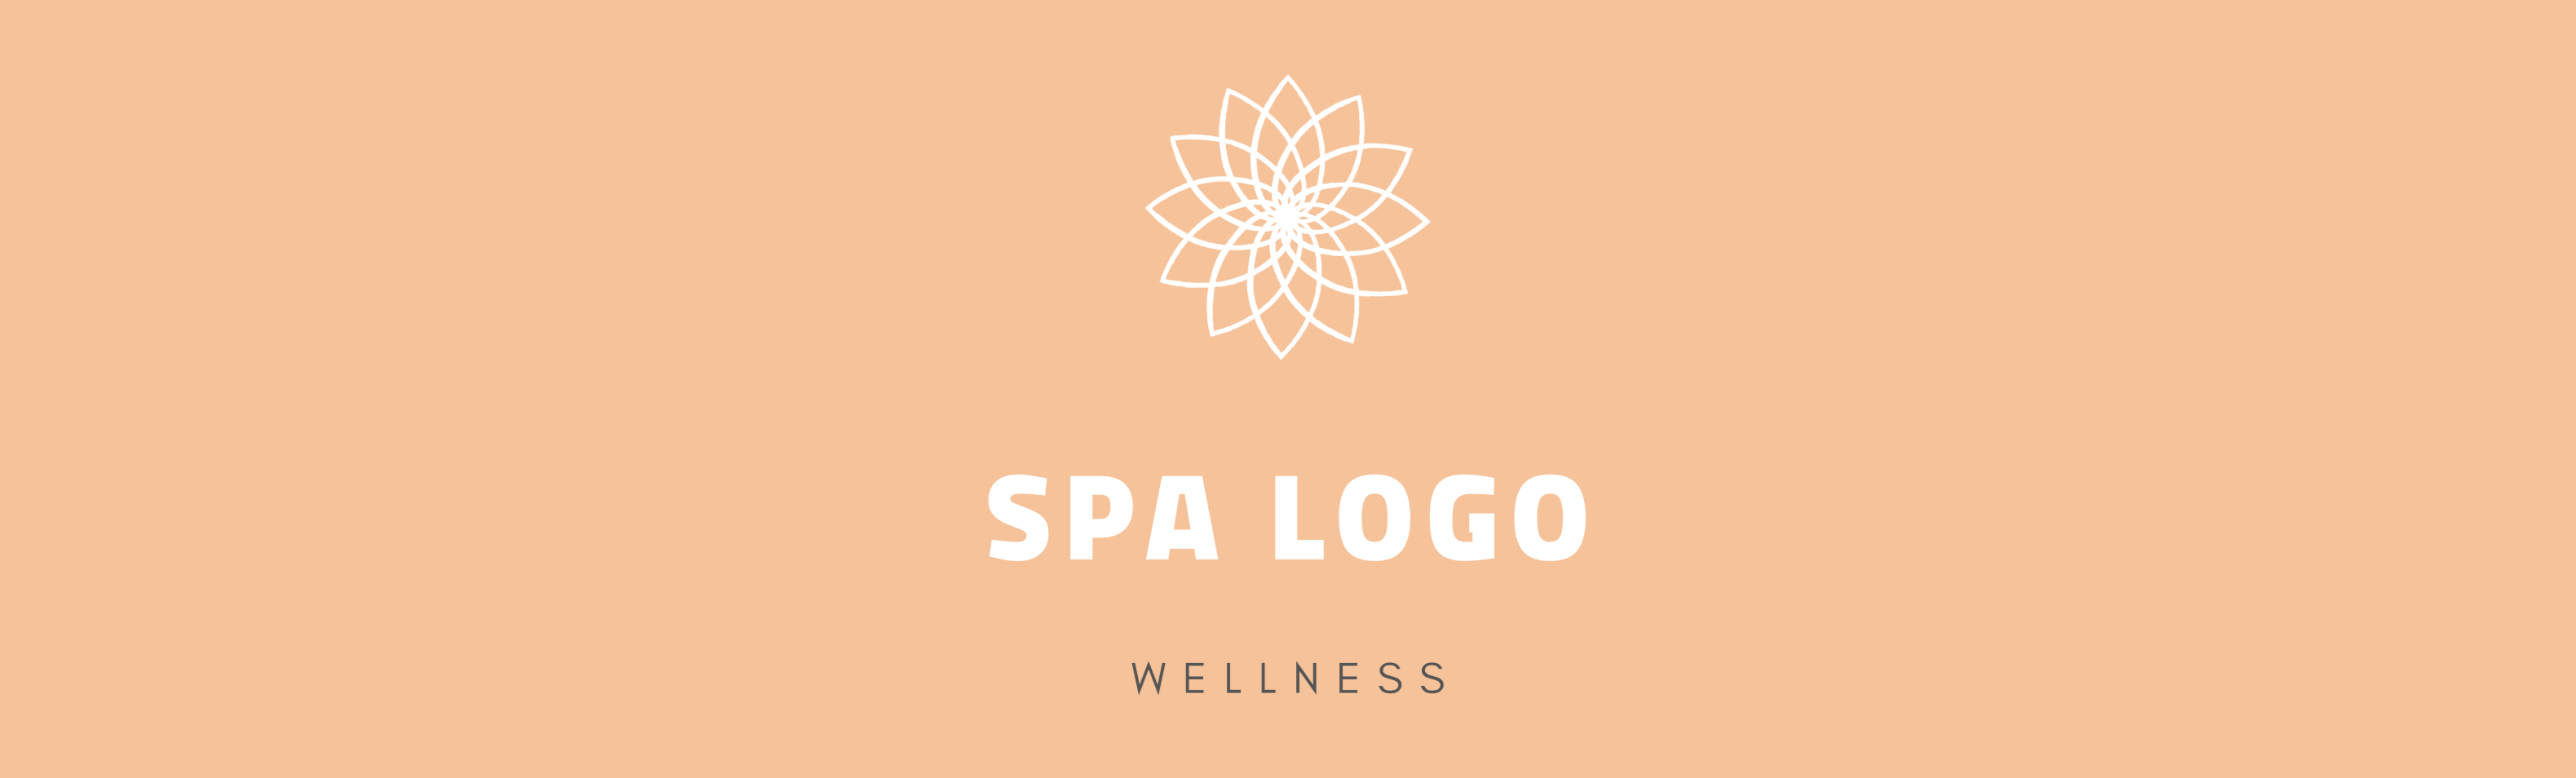 Spa wellness logo